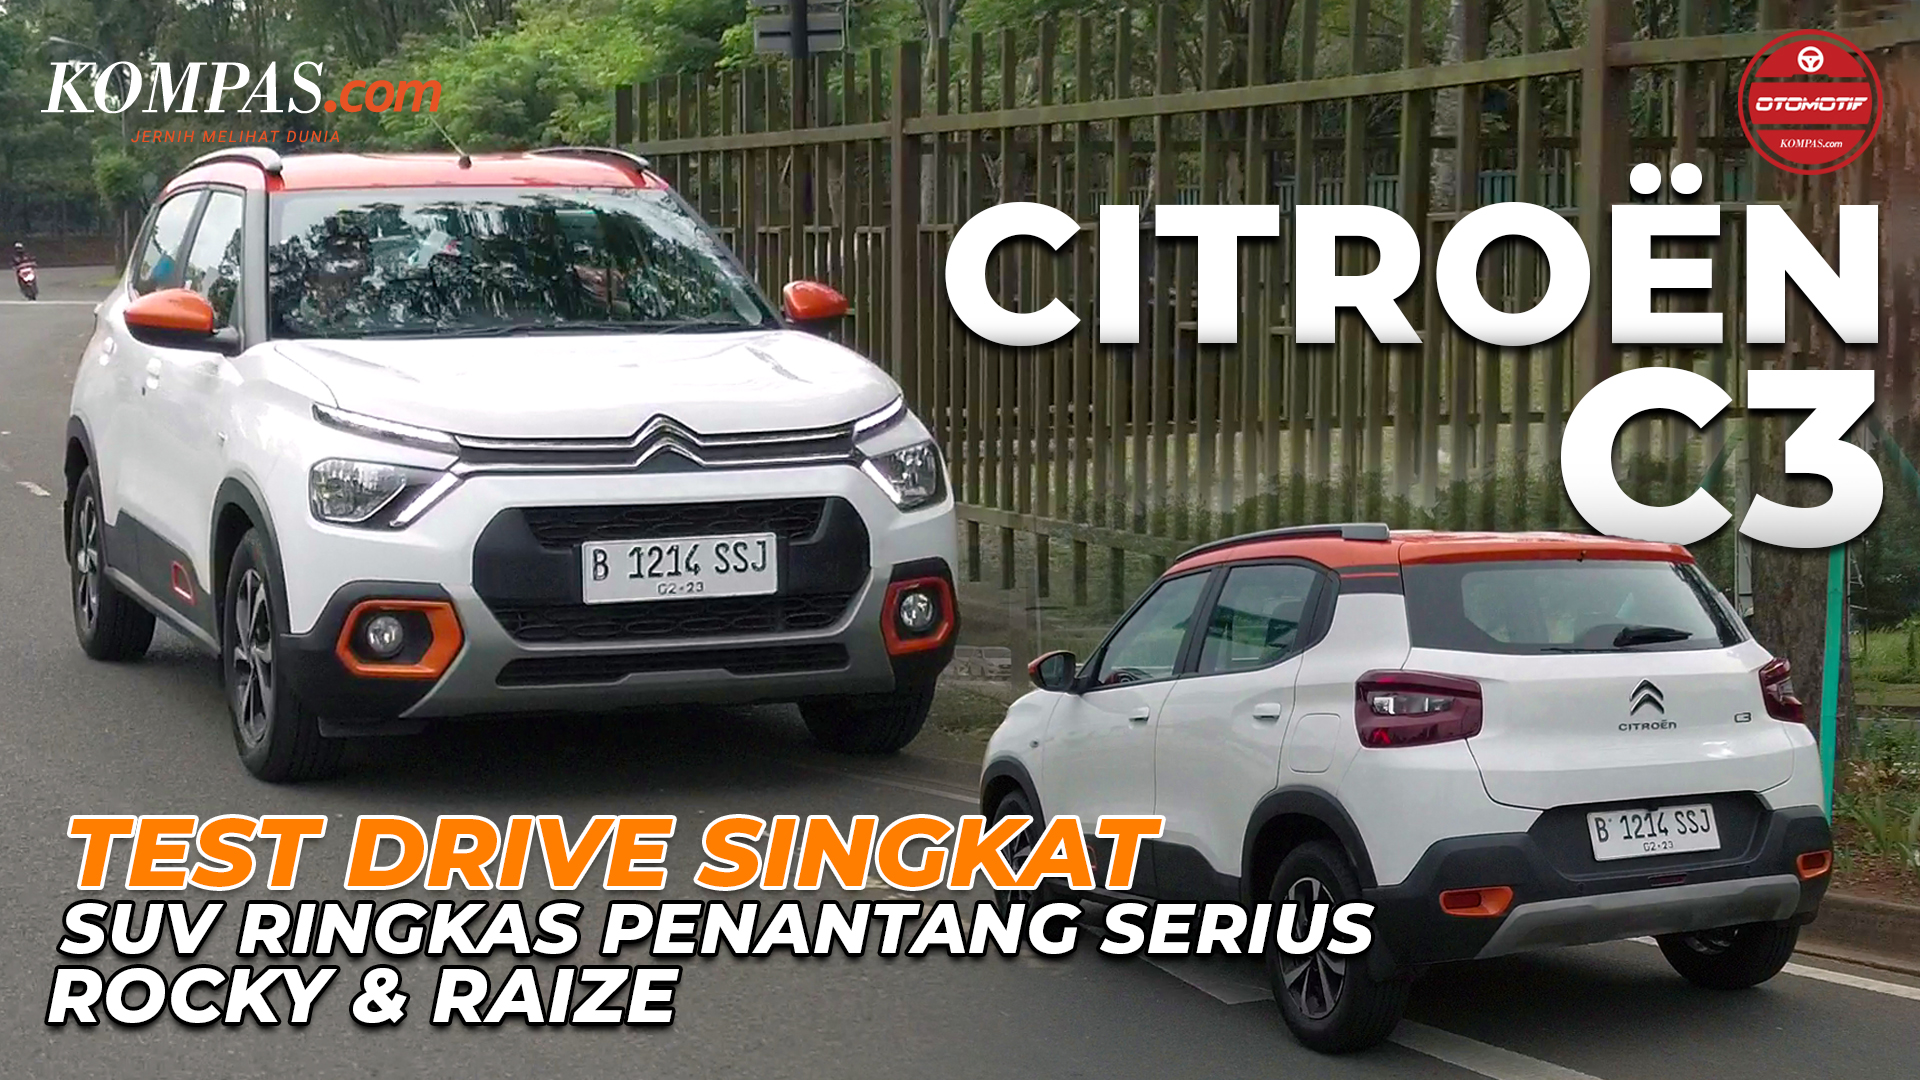 TEST DRIVE SINGKAT | Citroën C3 | Penantang Serius Rocky & Raize